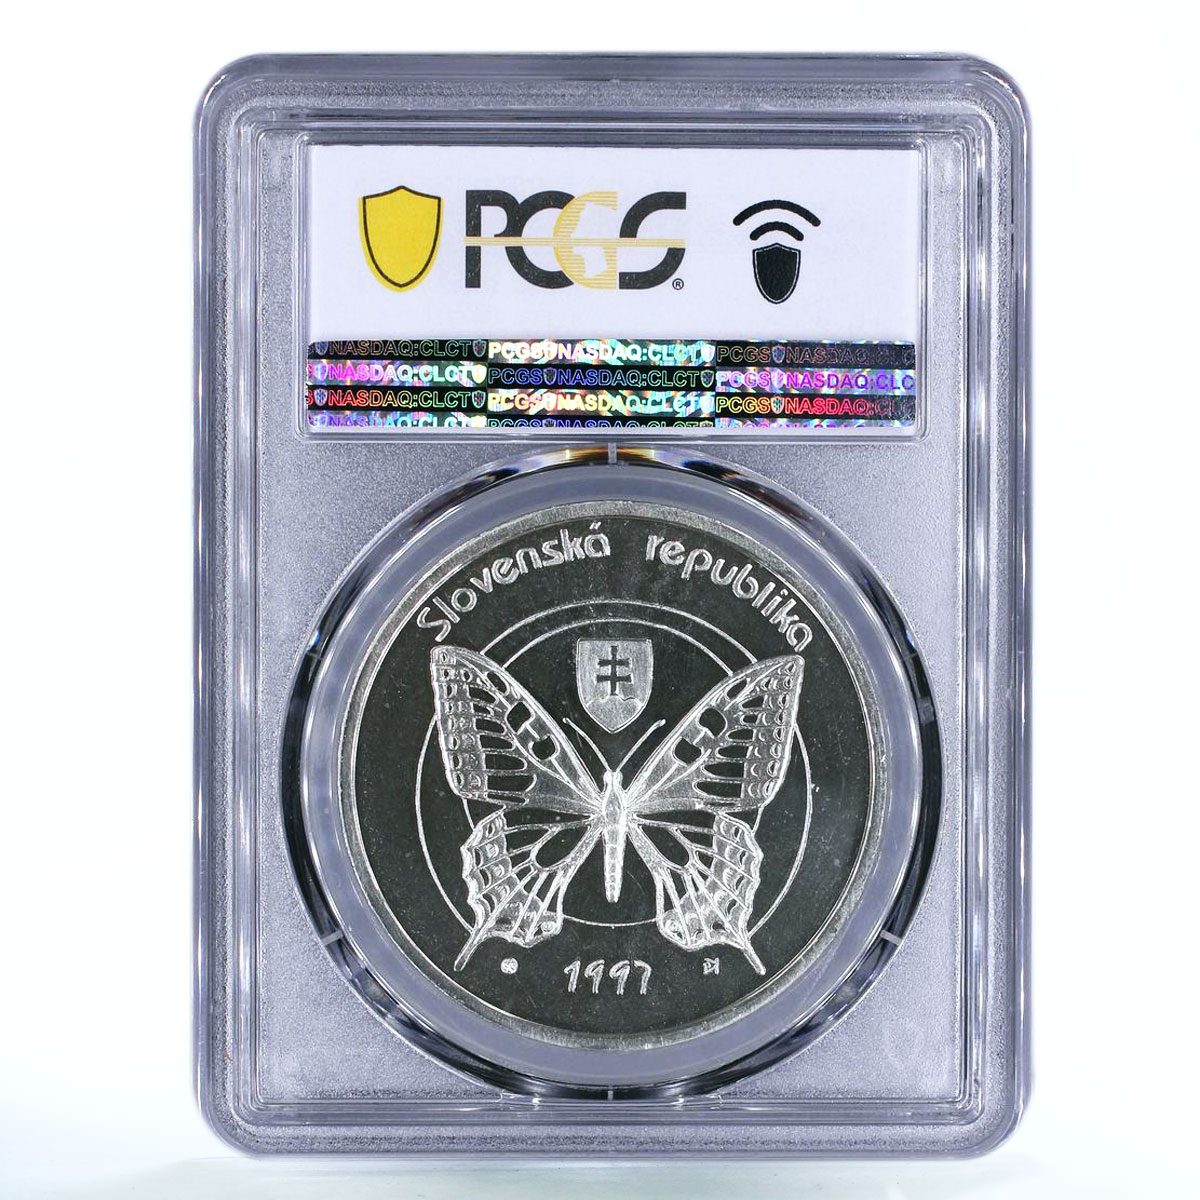 Slovakia 500 korun Pieninsky National Park Butterfly MS68 PCGS silver coin 1997